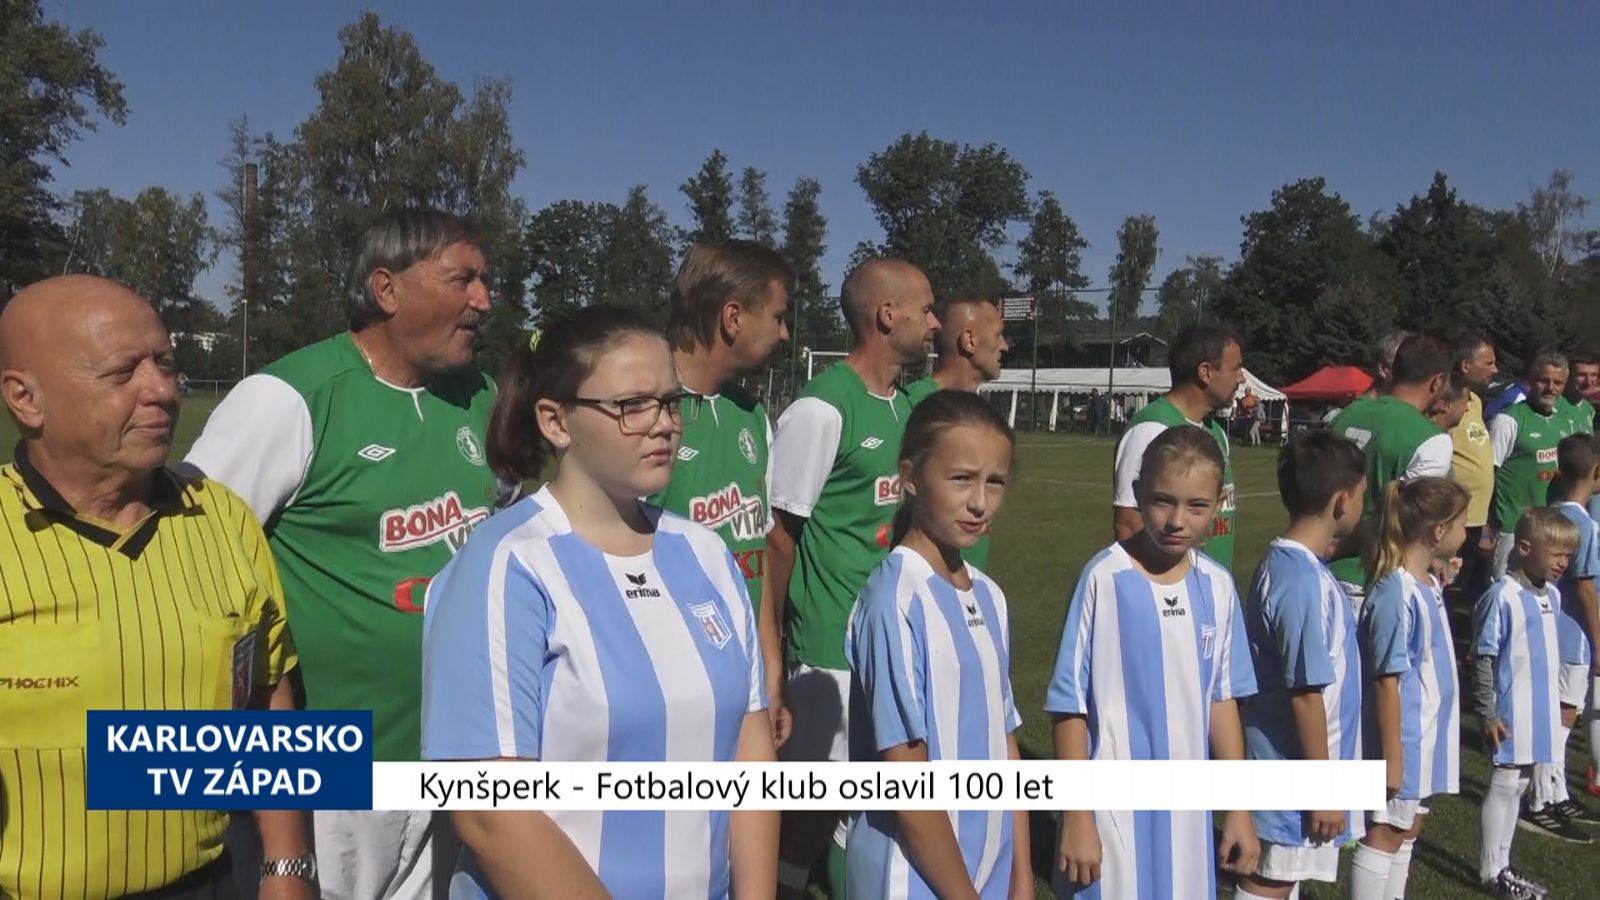 Kynšperk: Fotbalový klub oslavil 100 let (TV Západ)